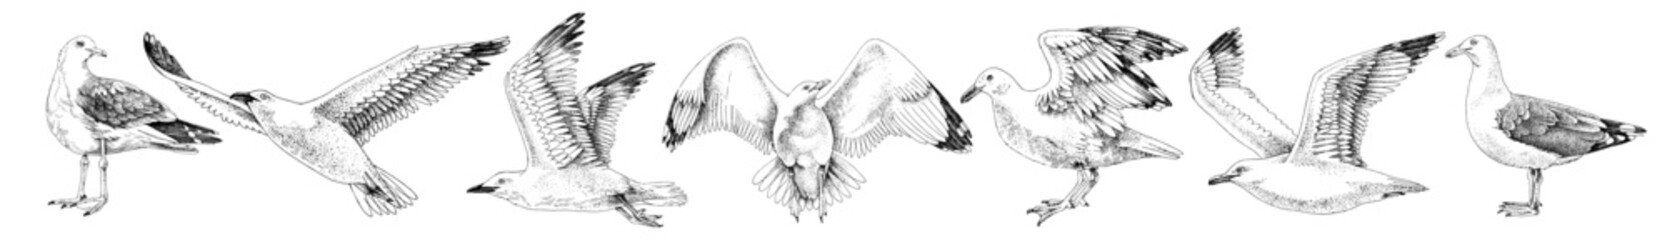 Hand drawn monochrome seagulls collection - 701881810